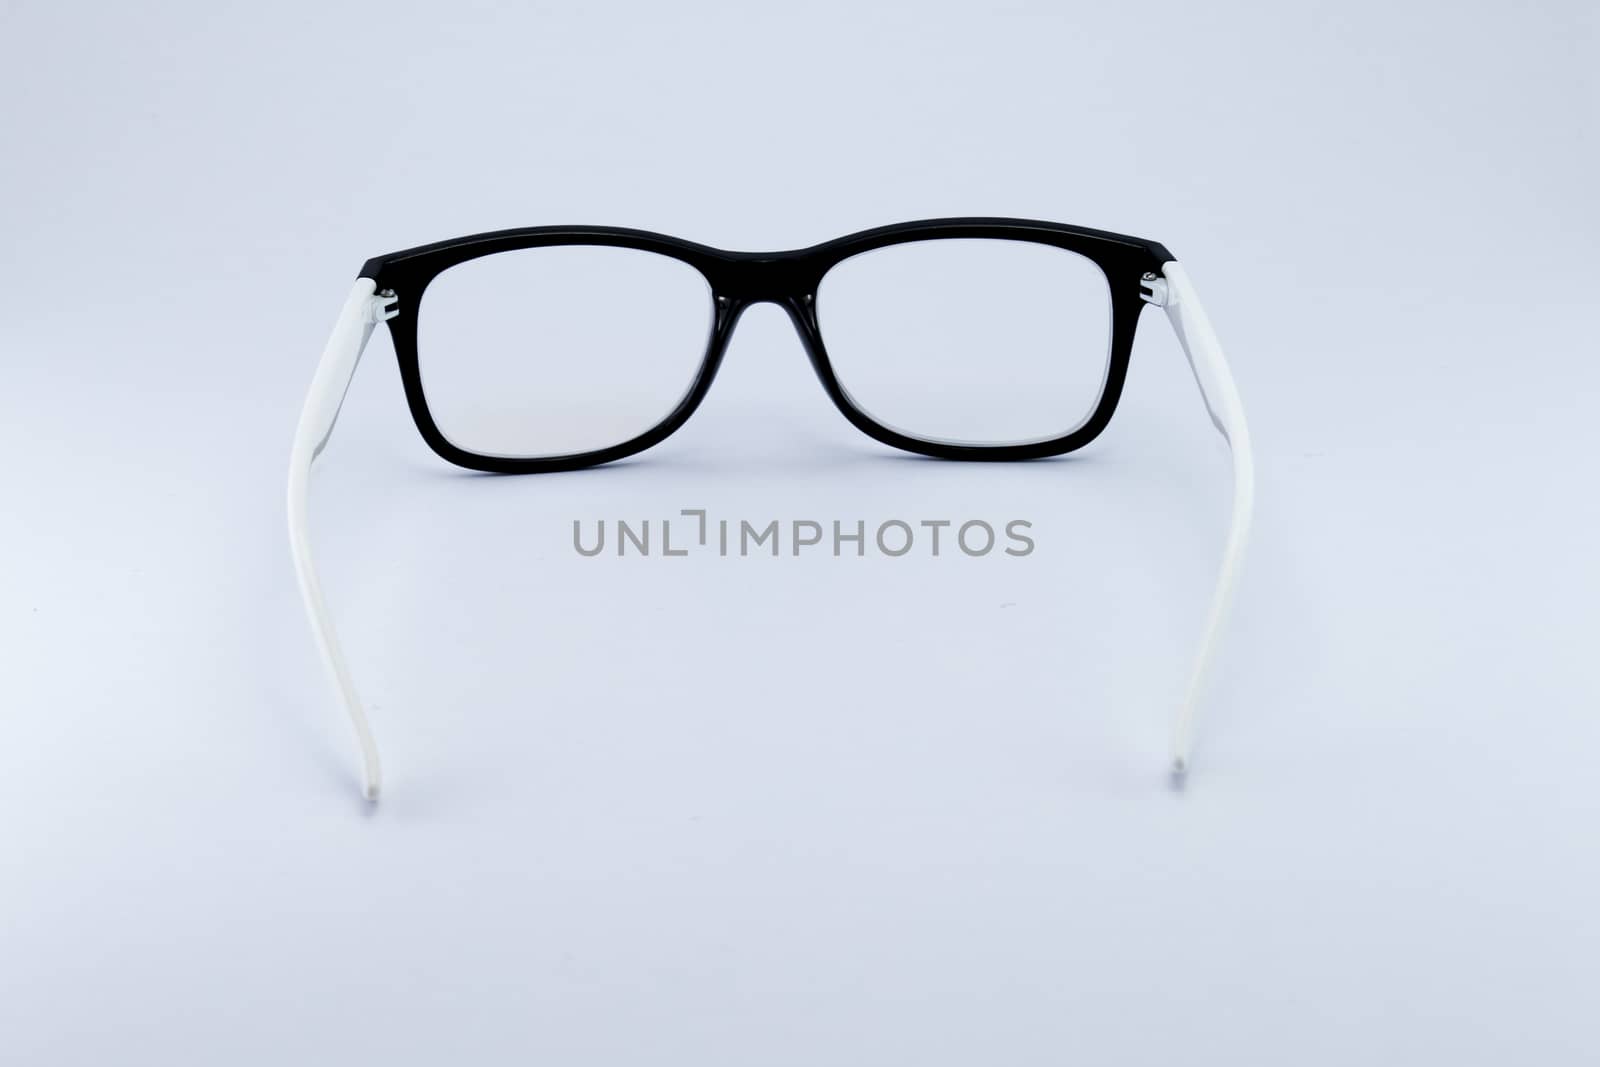 Black glasses to improve eyesight isolated on white background by teerawit